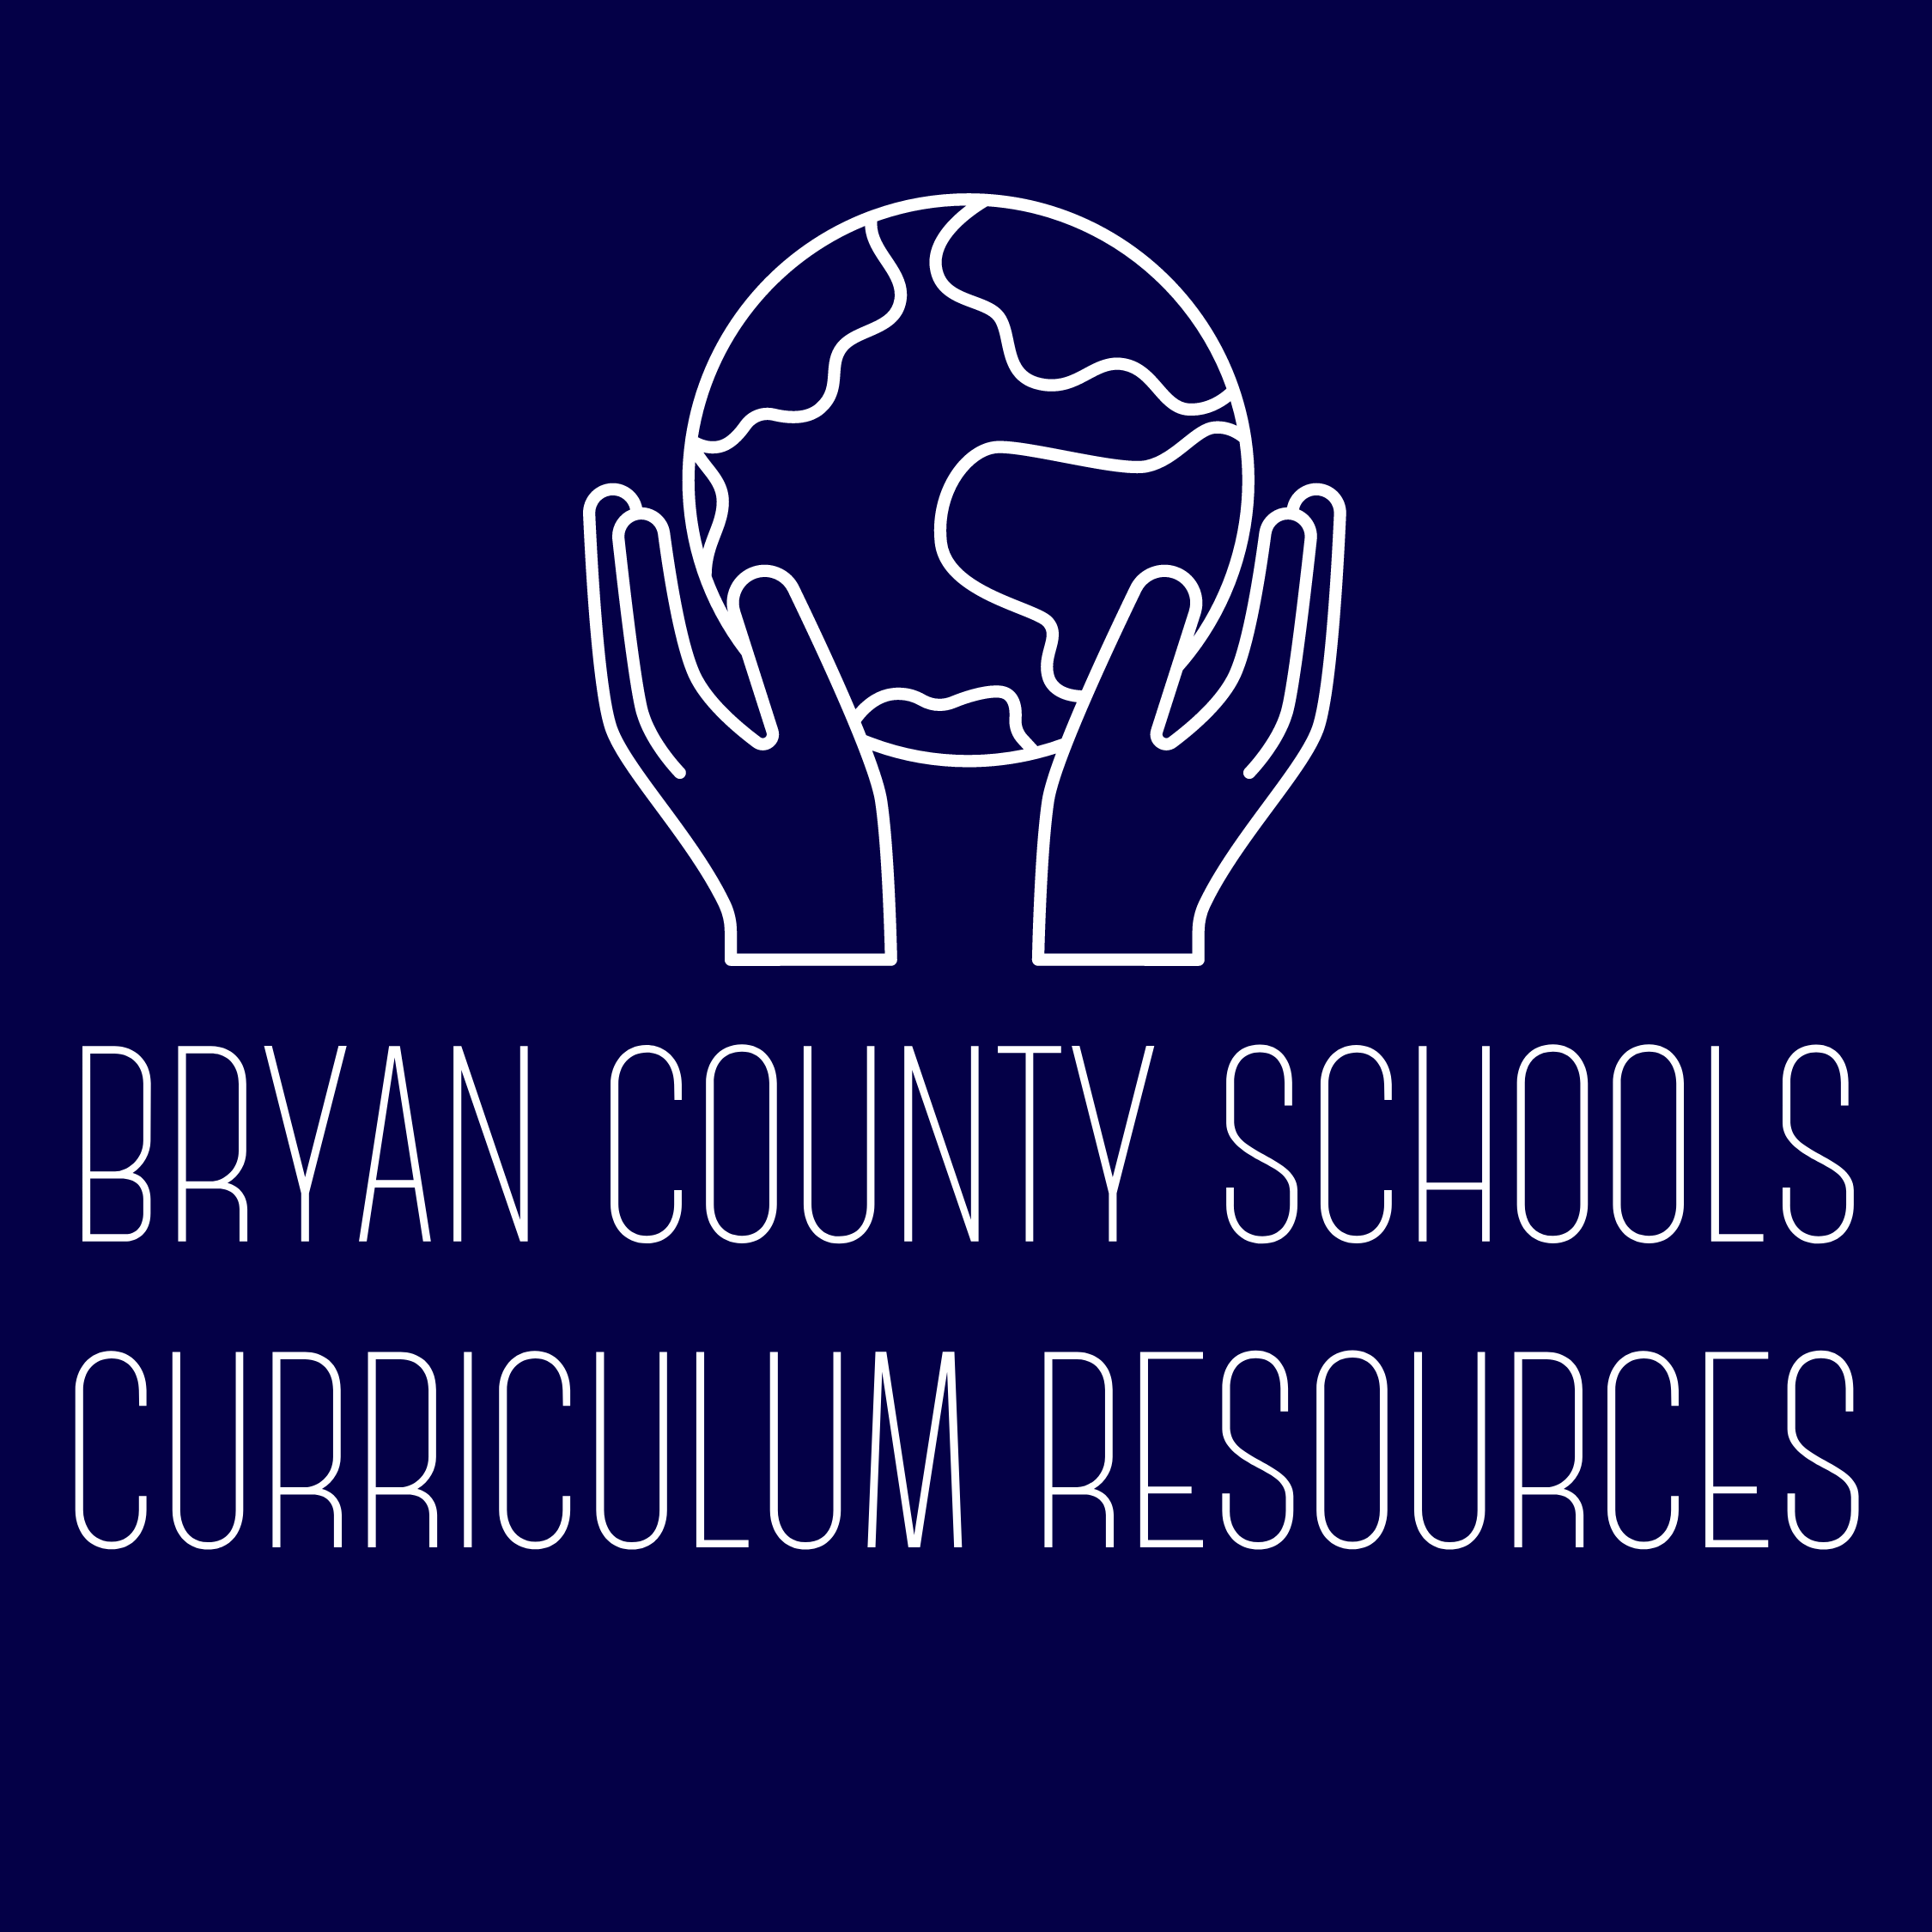 Bryan County Schools Curriculum Resources